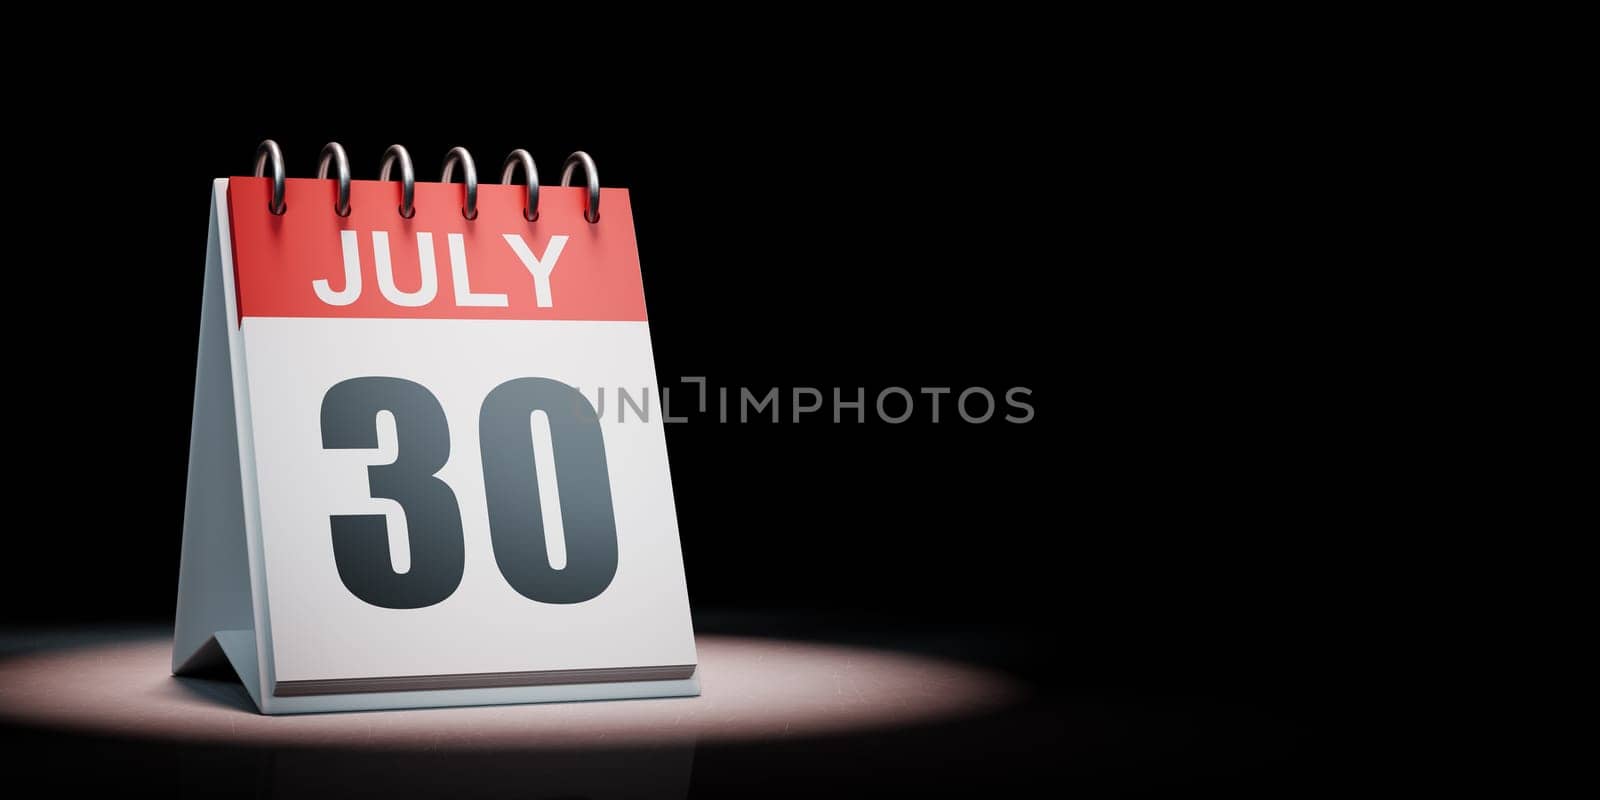 July 30 Calendar Spotlighted on Black Background by make